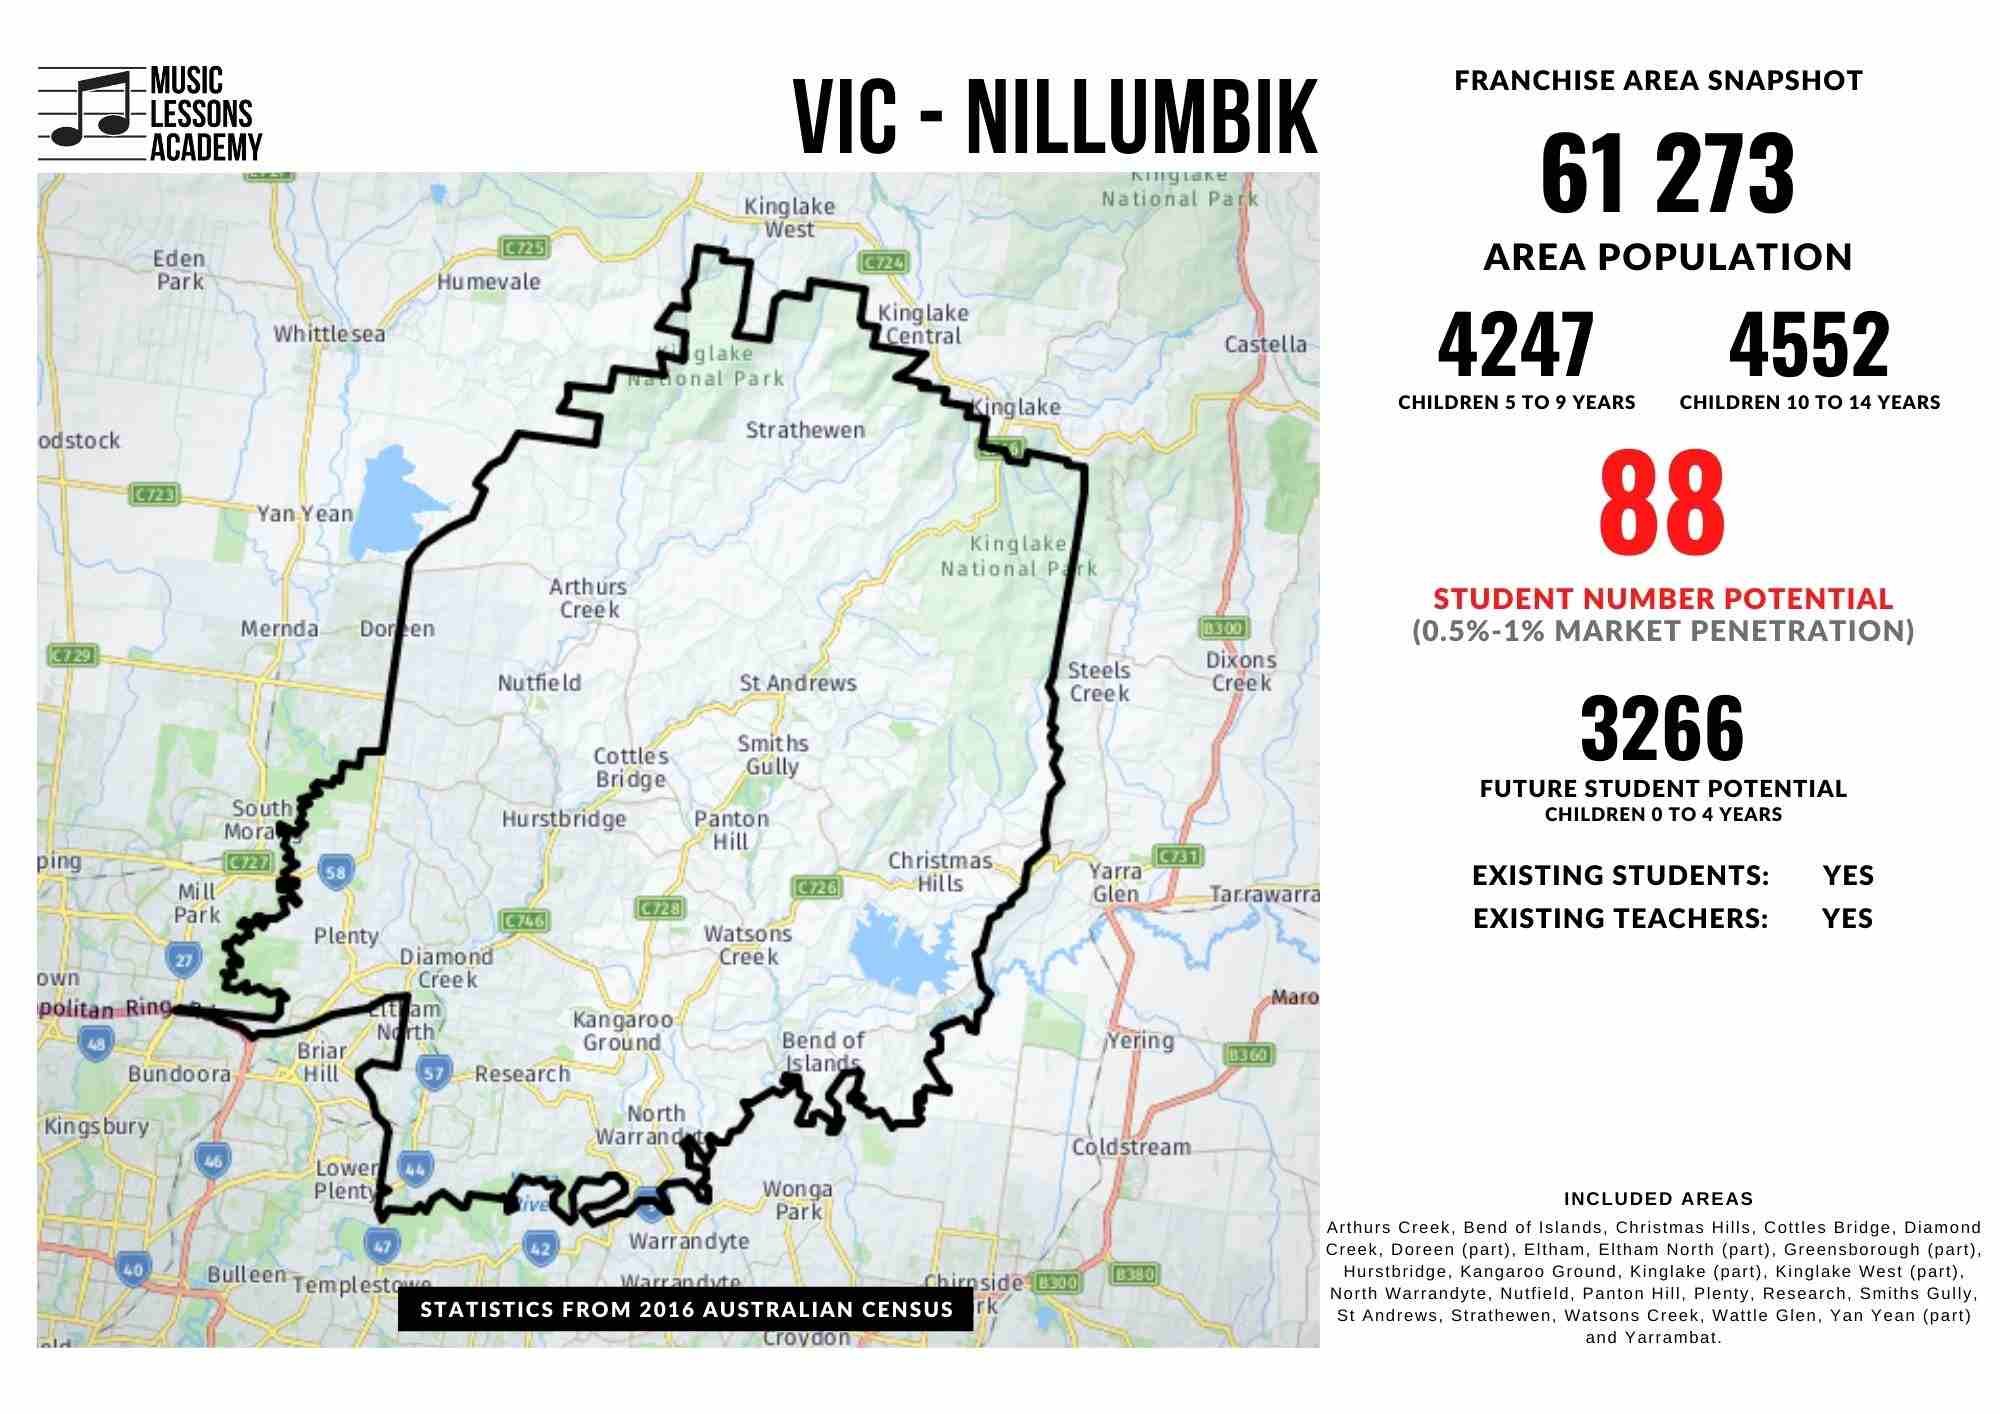 VIC Nillumbik Diamong Creek Franchise for sale